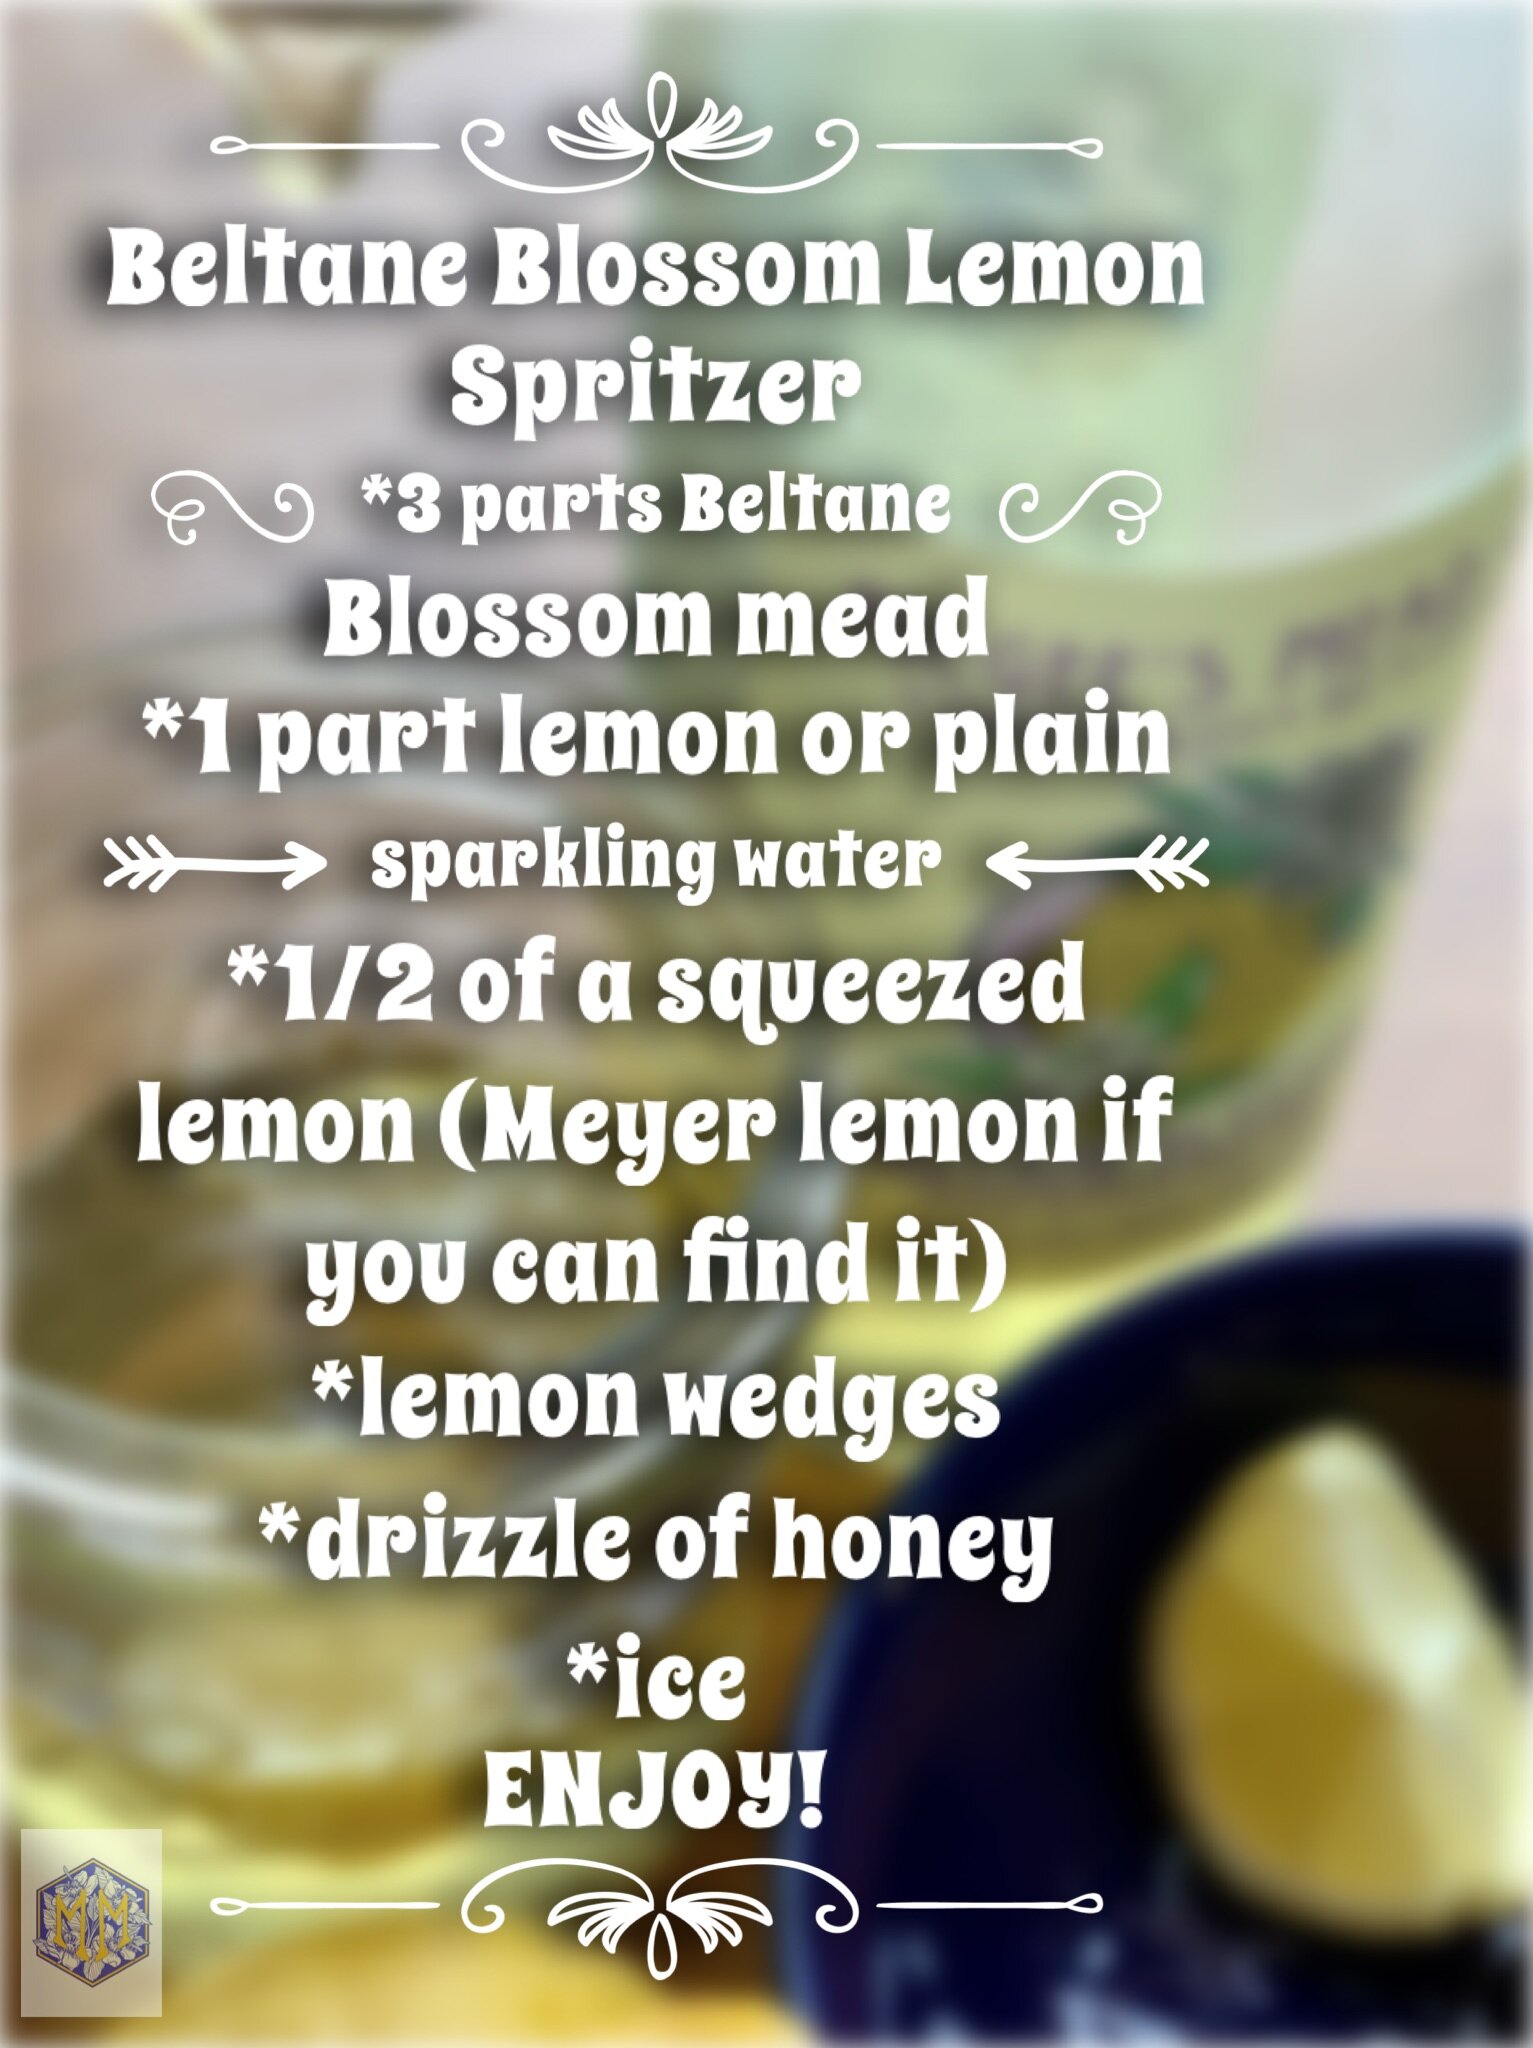 BB lemon spritzer recipe card copy.jpg